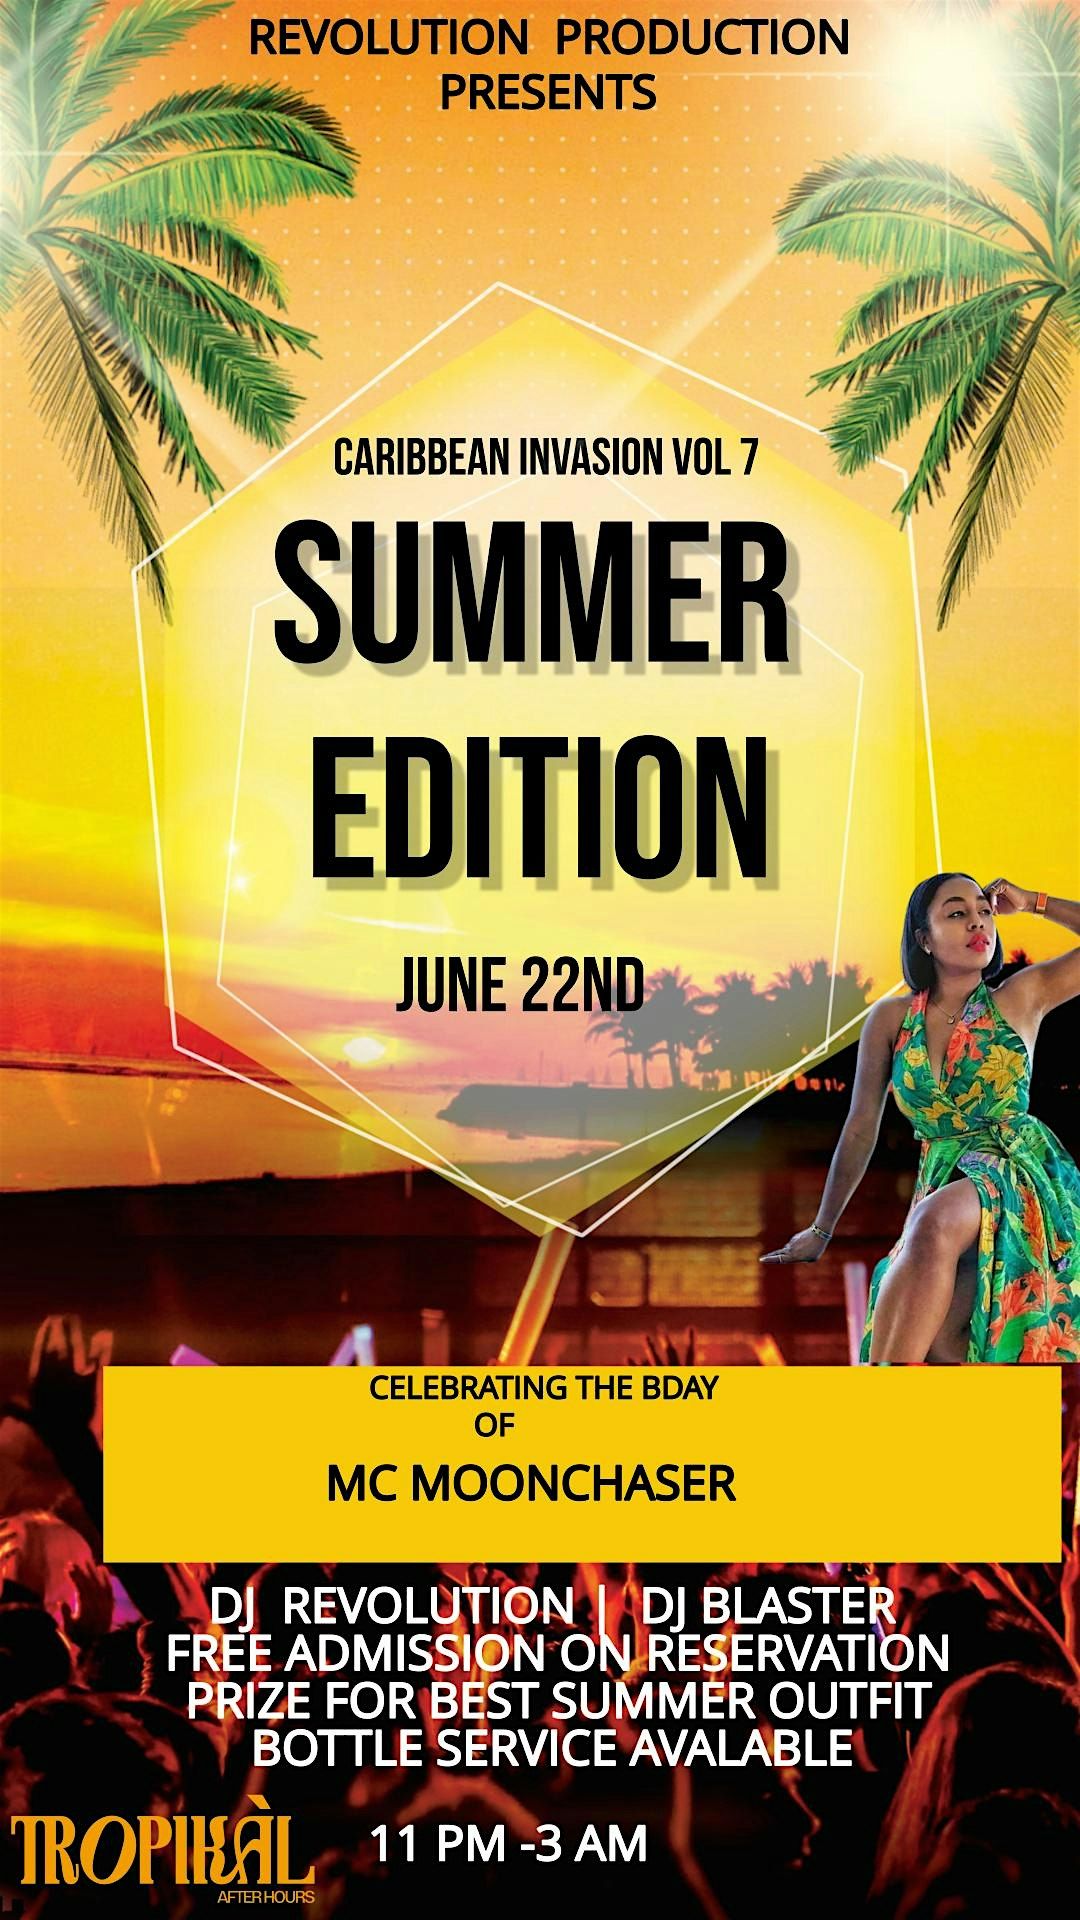 Carribean invasion vol 7 SUMMER EDITION